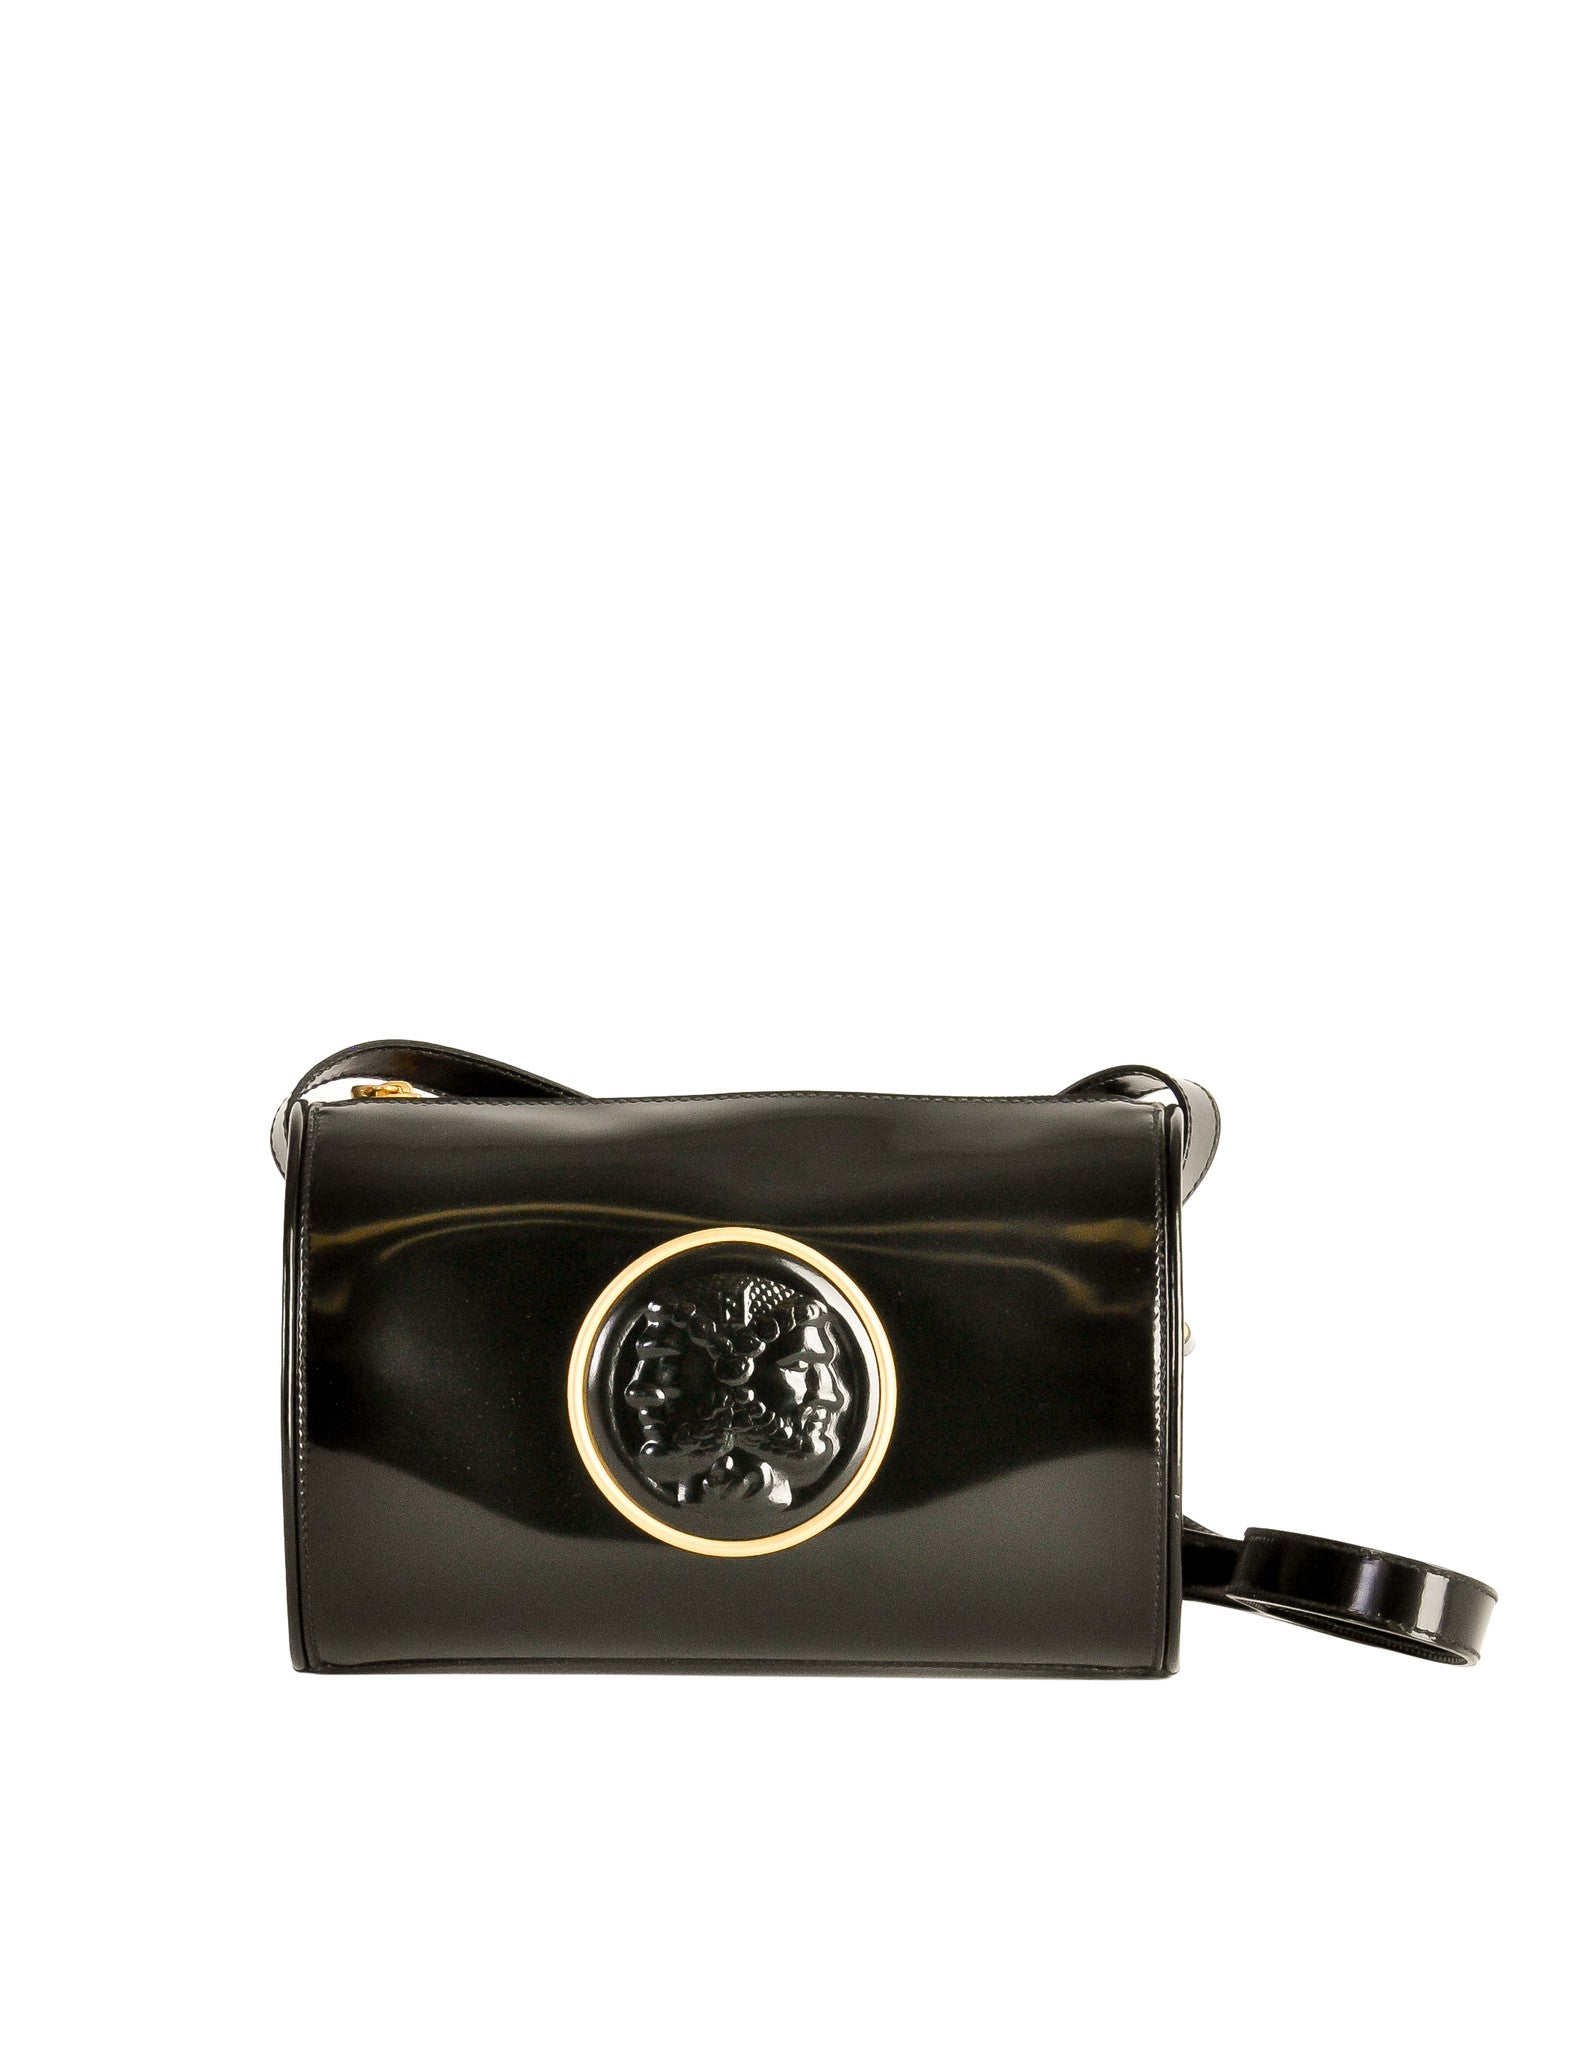 Fendi Vintage Black Leather Janus Bag - from Amarcord Vintage Fashion